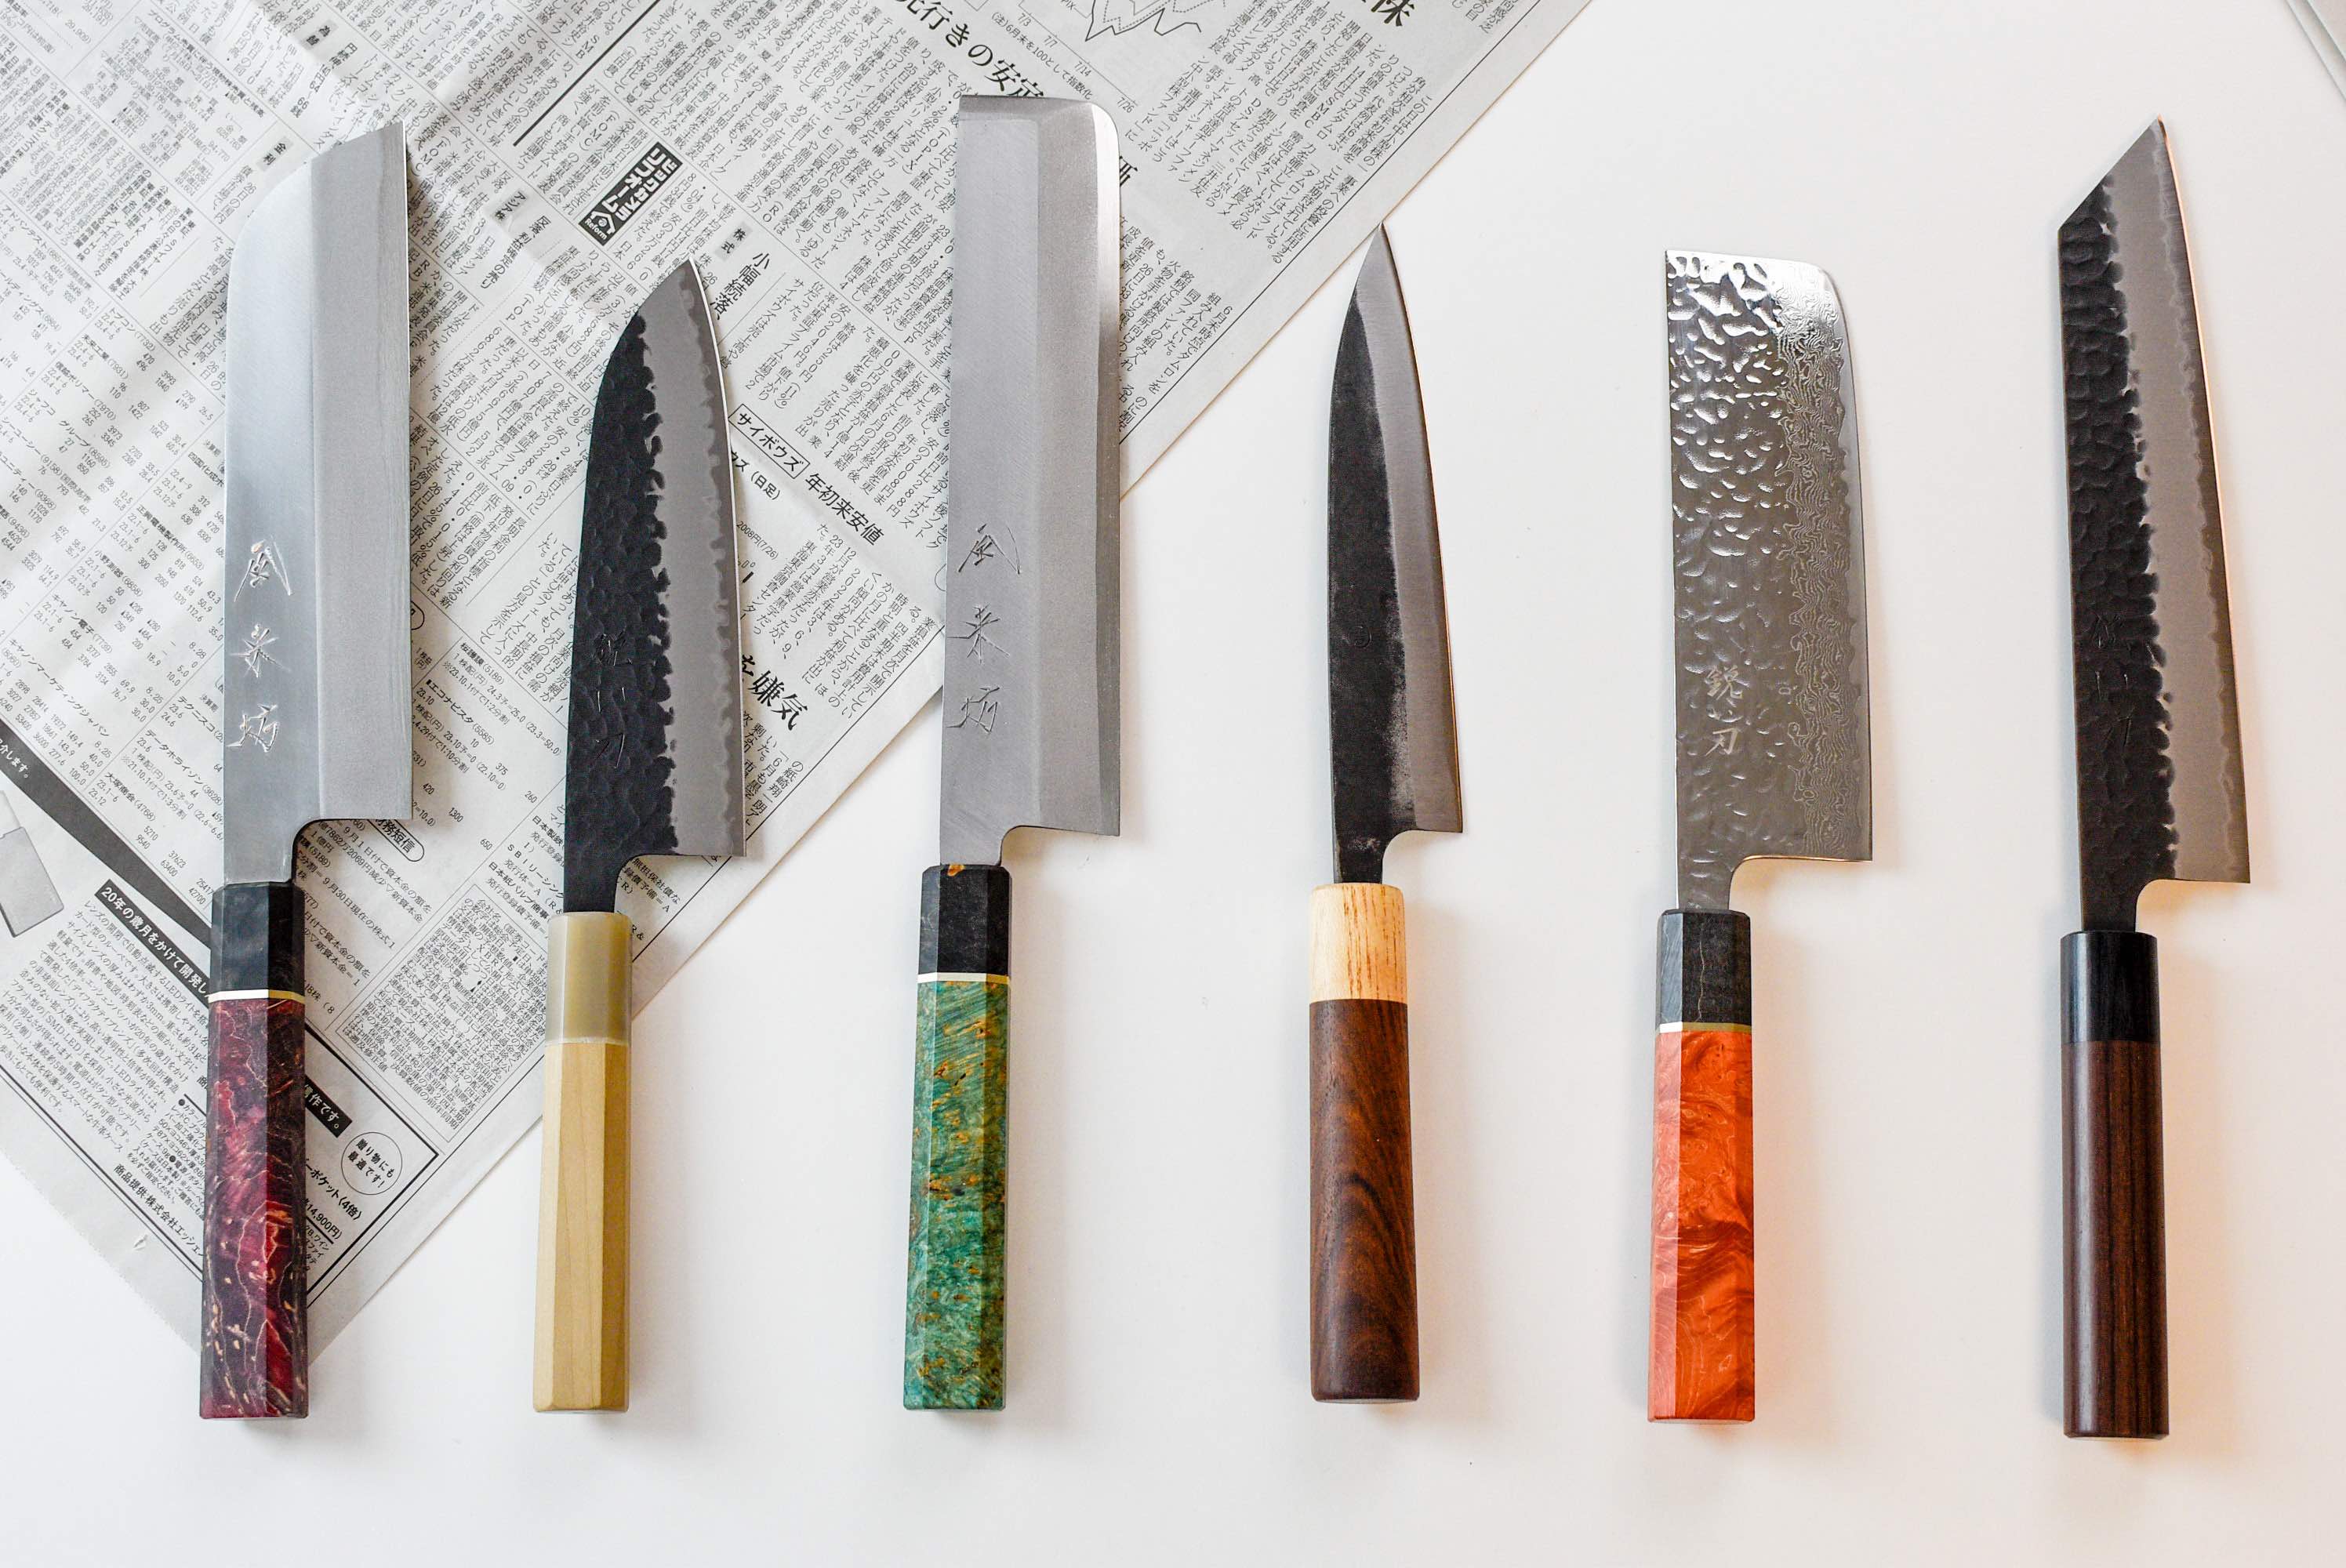 Shaping Custom Handle Scales, Knife Making